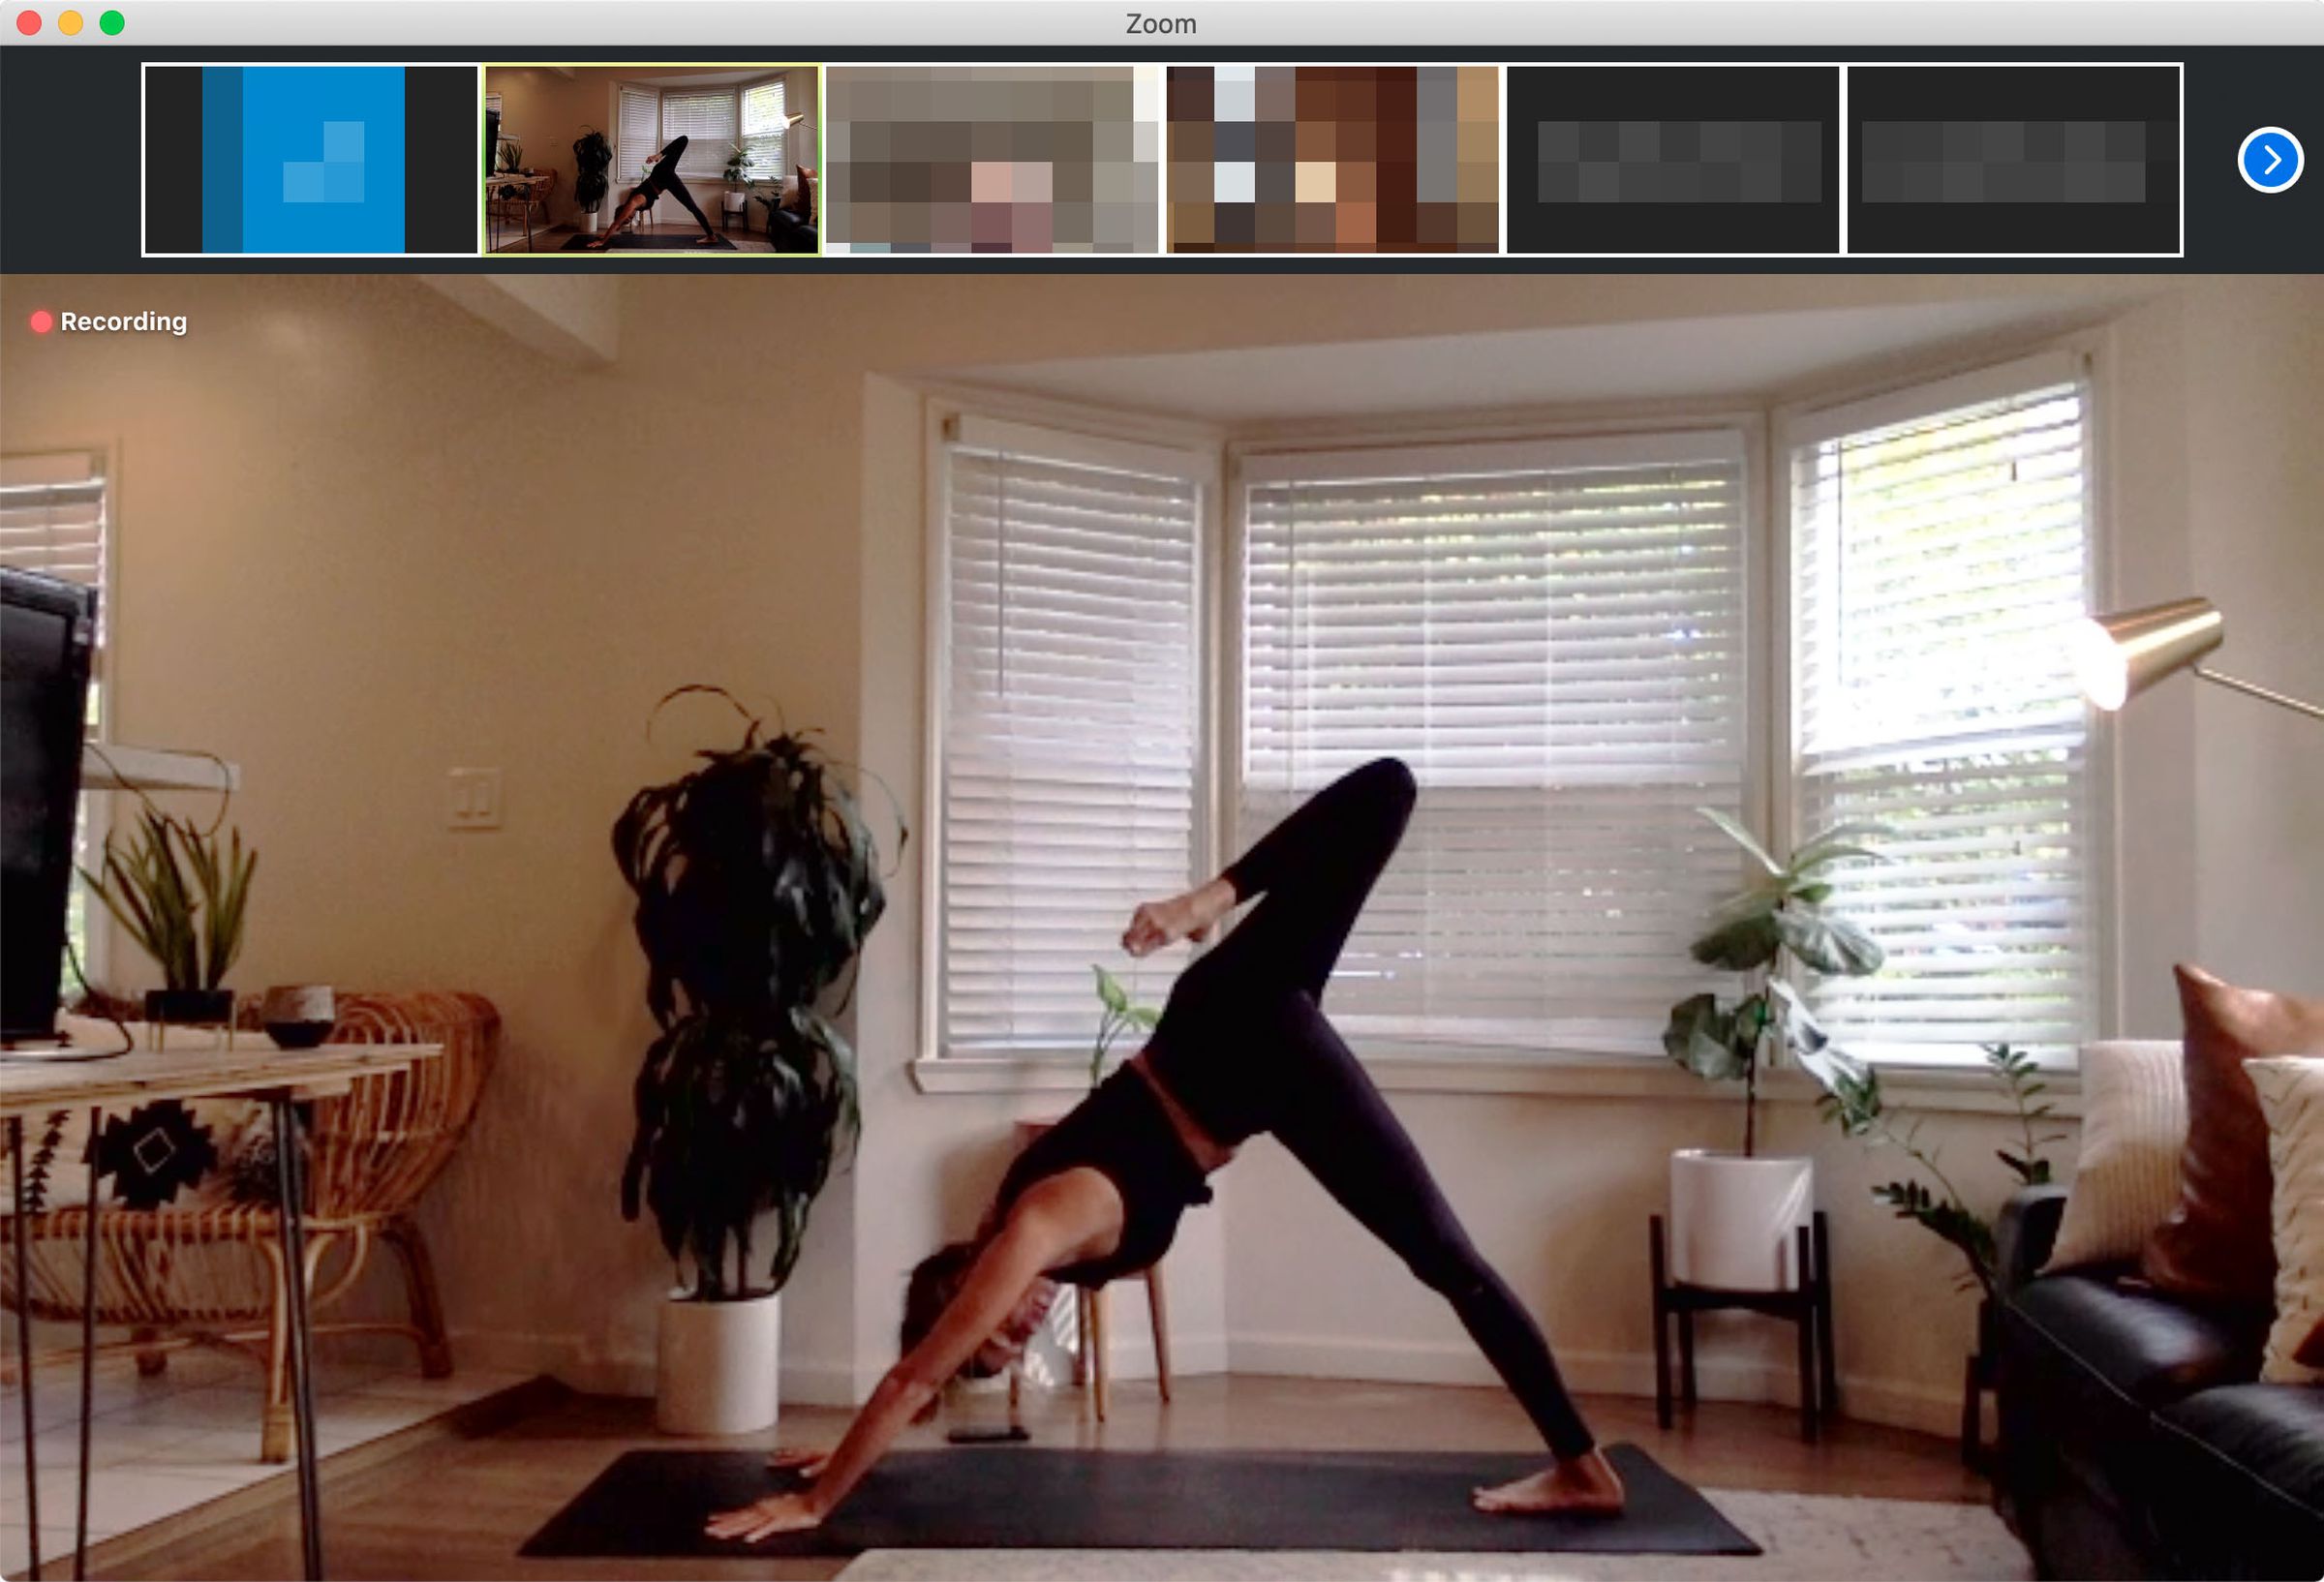 Katie Baki leads a yoga class over Zoom.